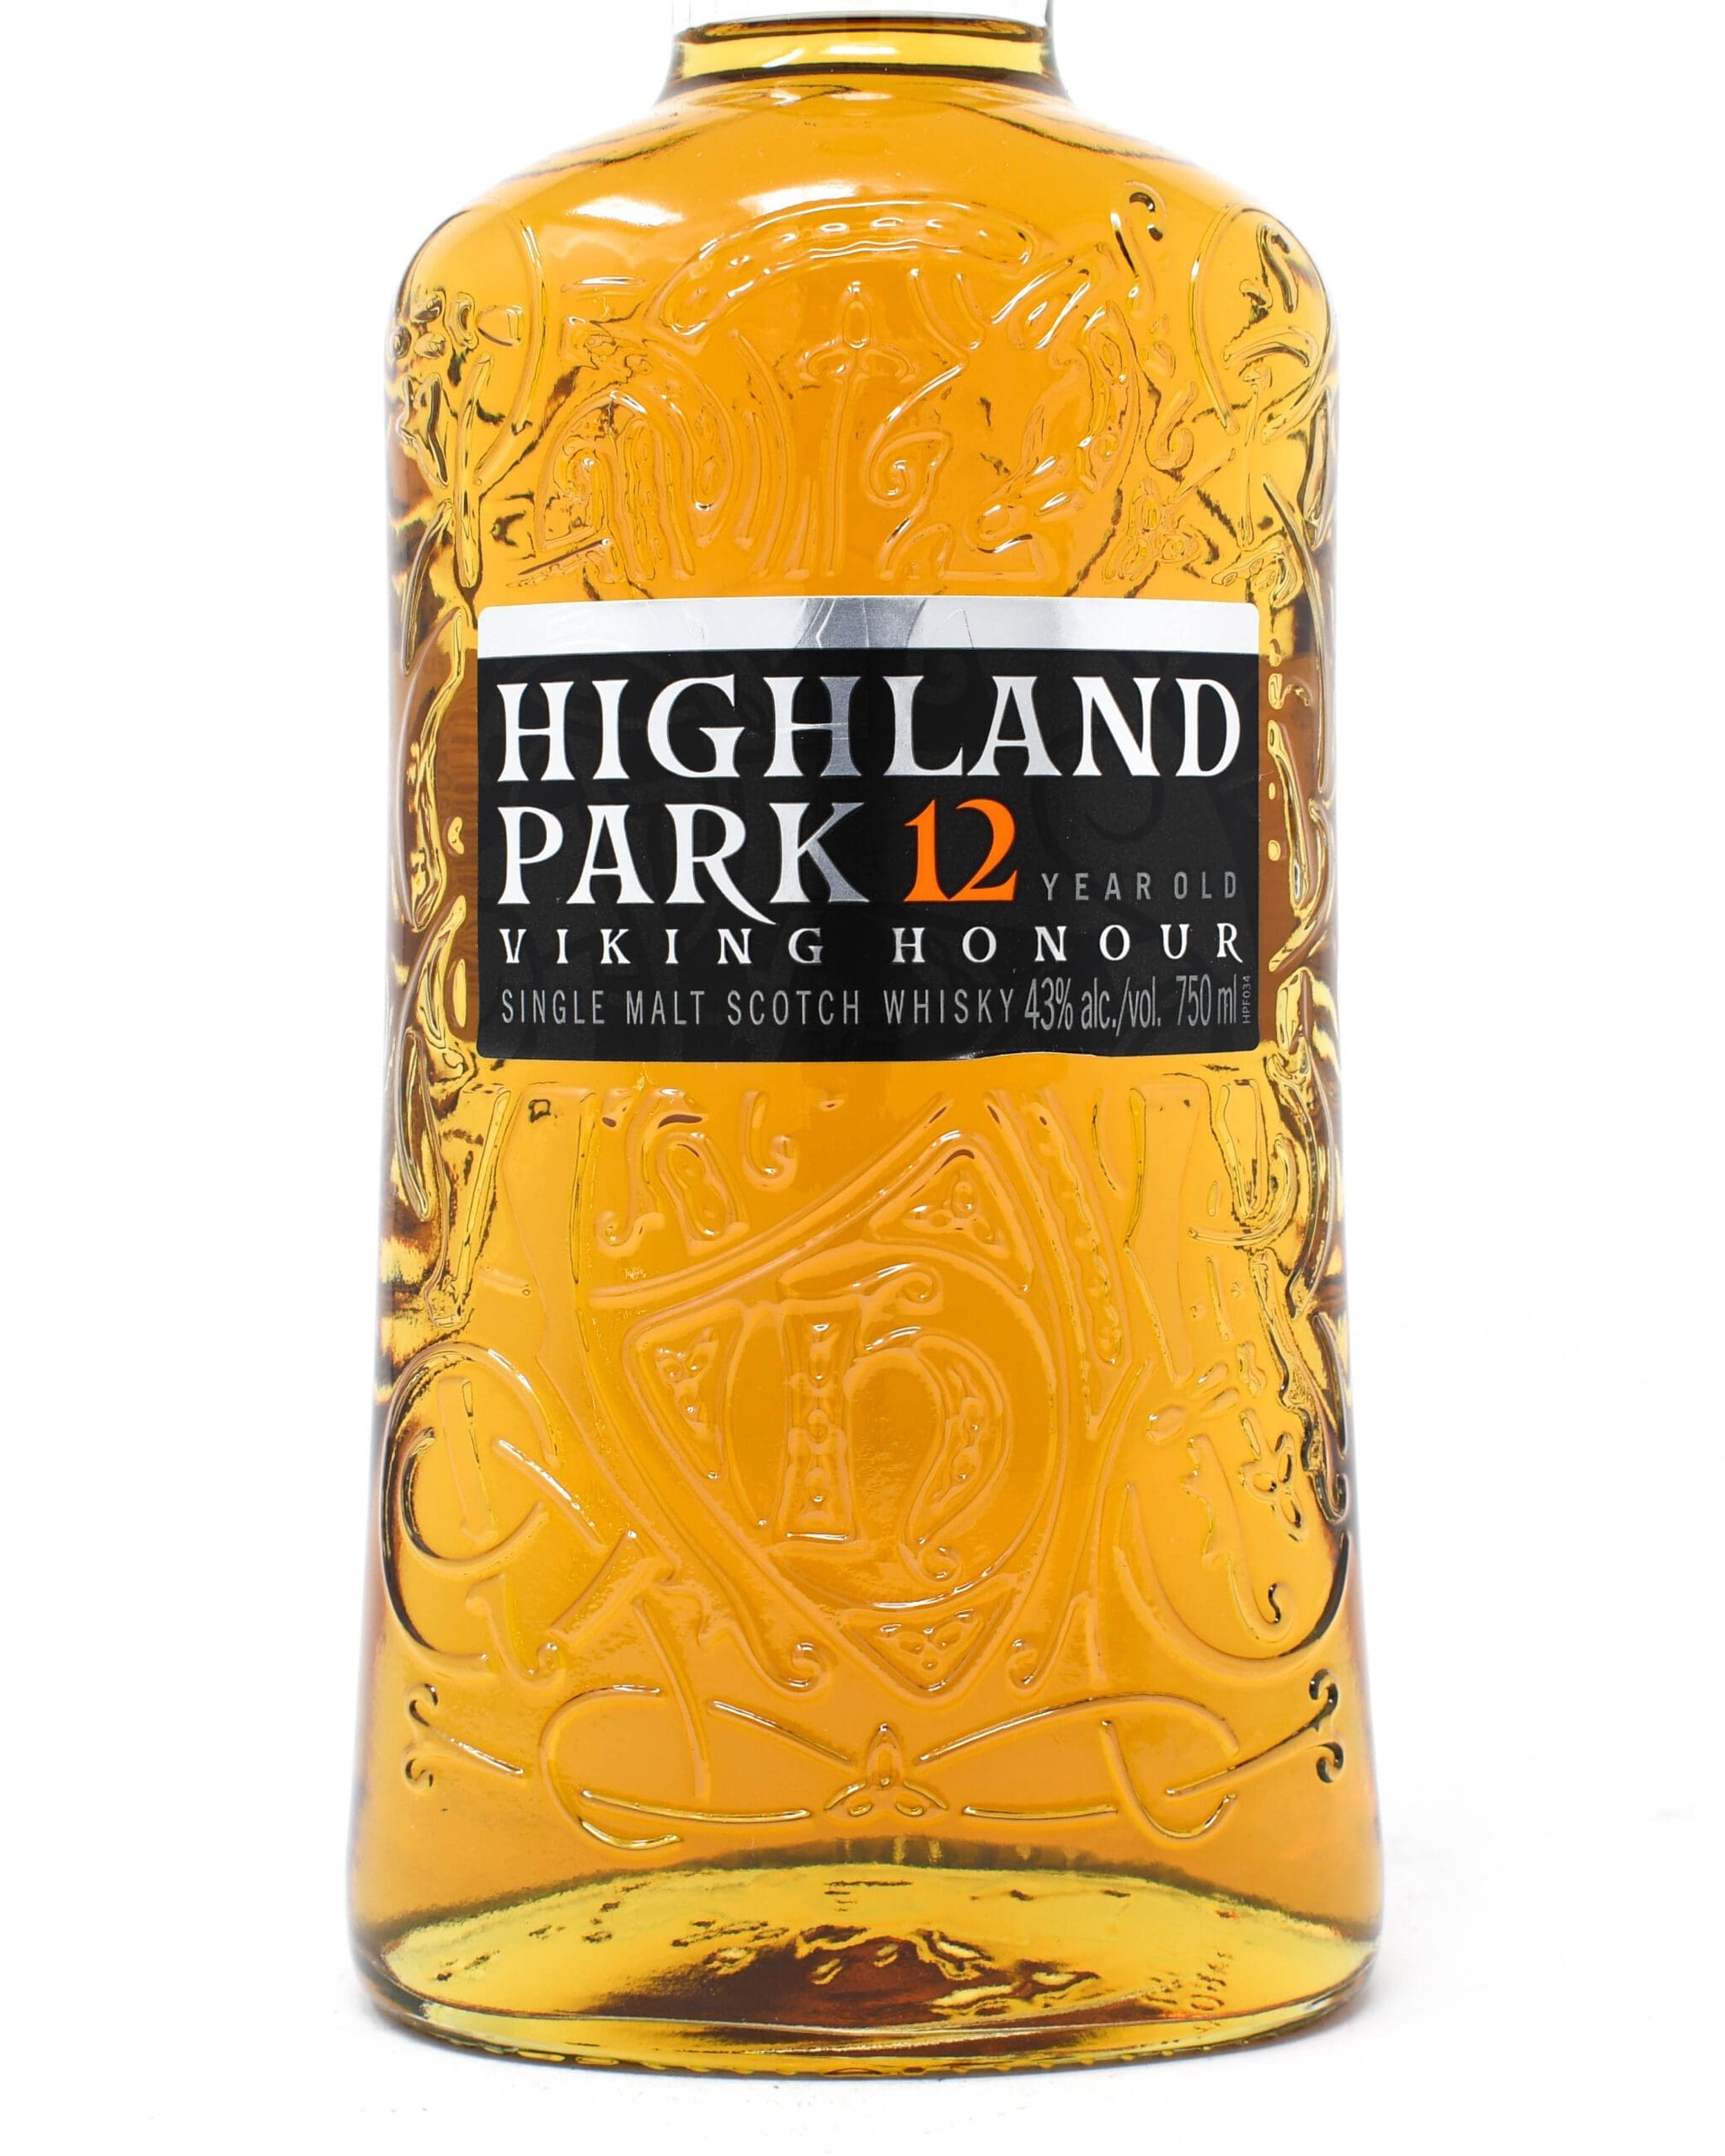 Highland Park, 12 Year Old, Viking Honour, Single Malt Scotch